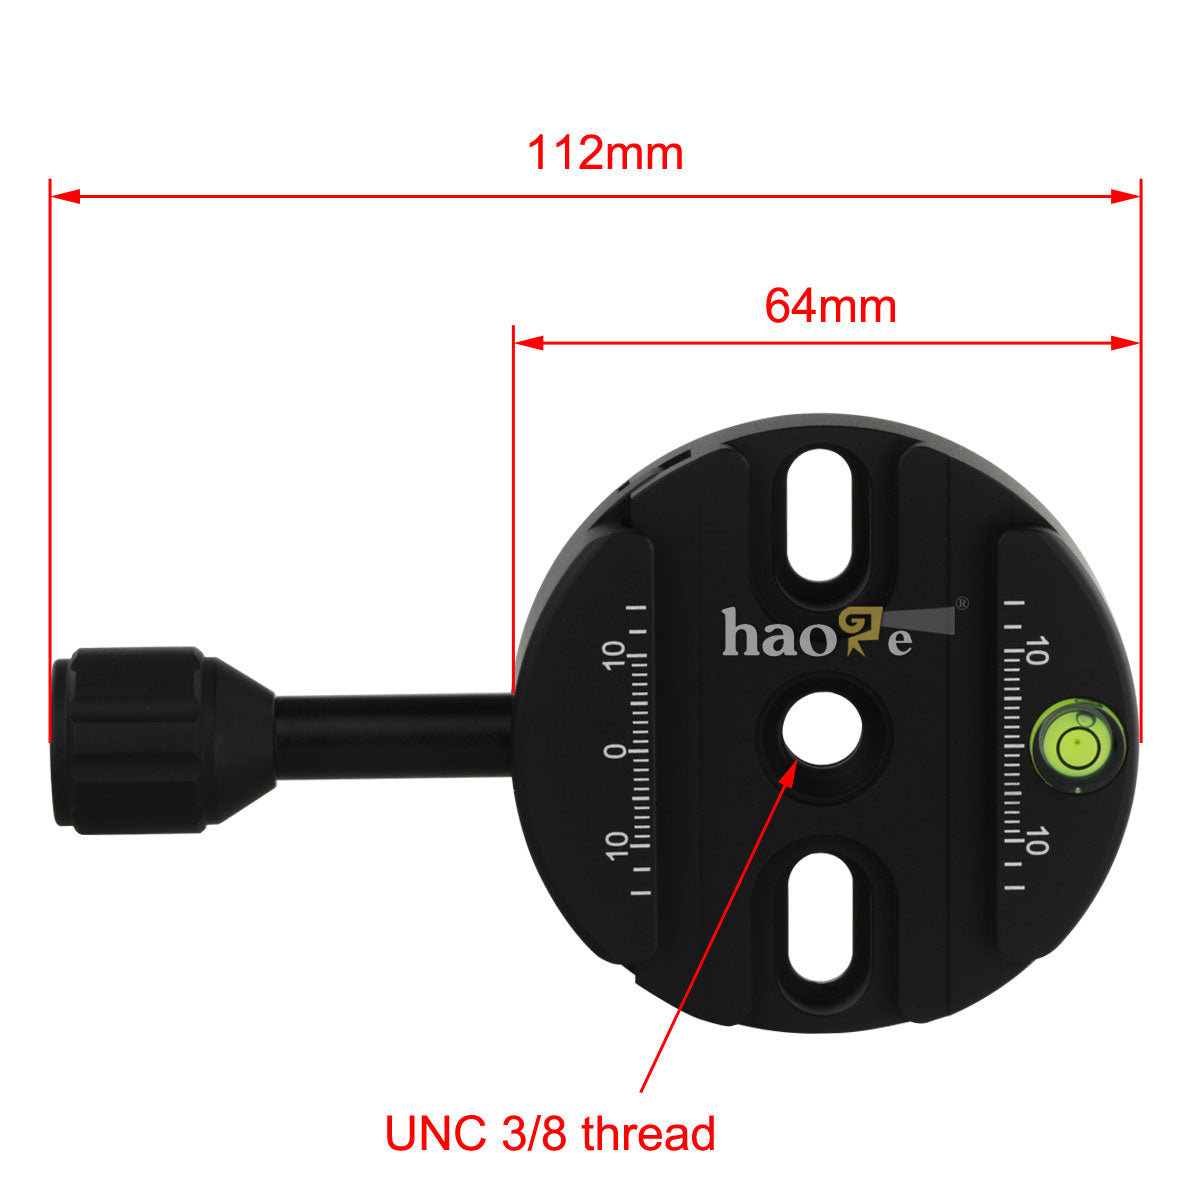 Haoge 64mm Screw Knob Clamp Adapter Mount for Quick Release QR Plate Camera Tripod Ballhead Monopod Ball Head Fit Arca Swiss